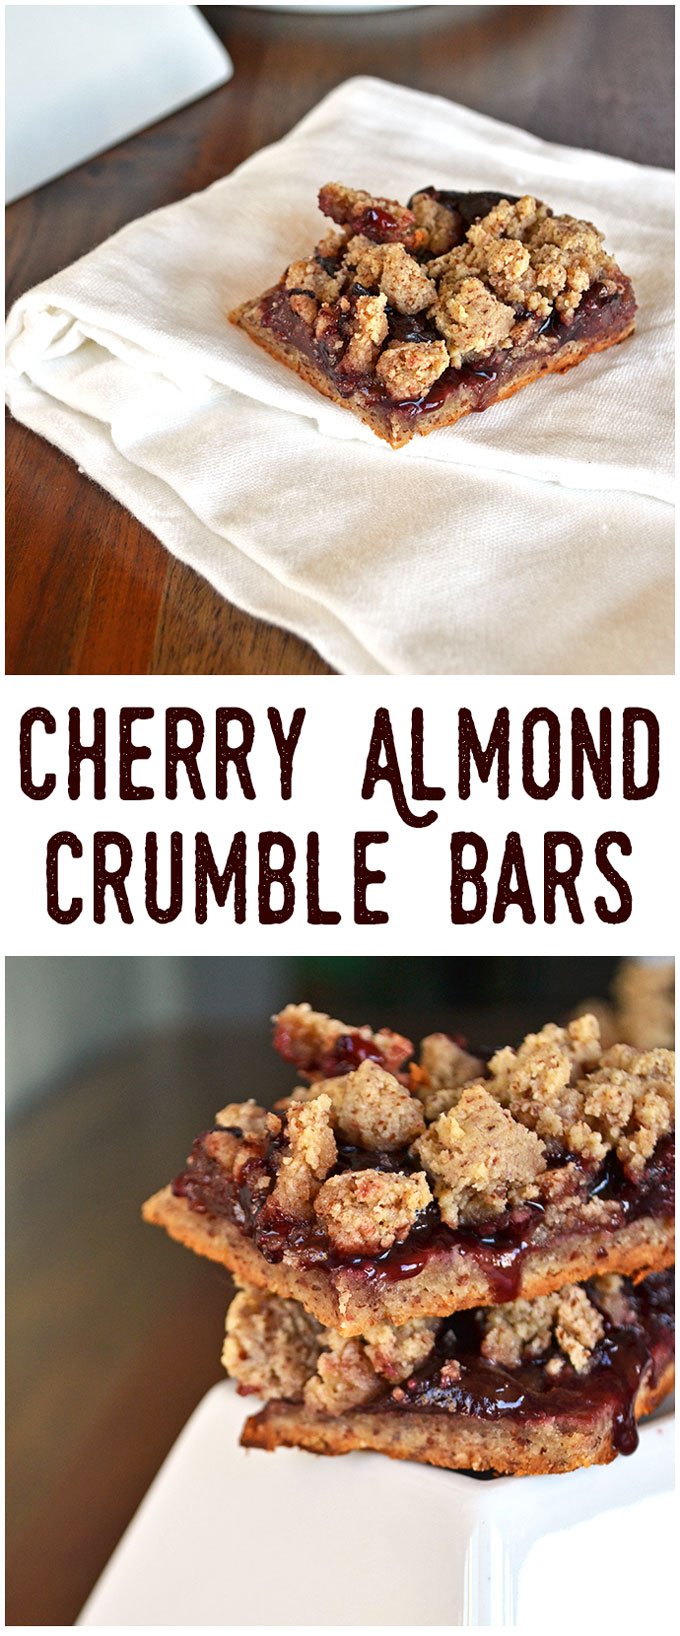 Cherry Almond Crumble Bars - Gluten Free, Vegan & so simple to make!